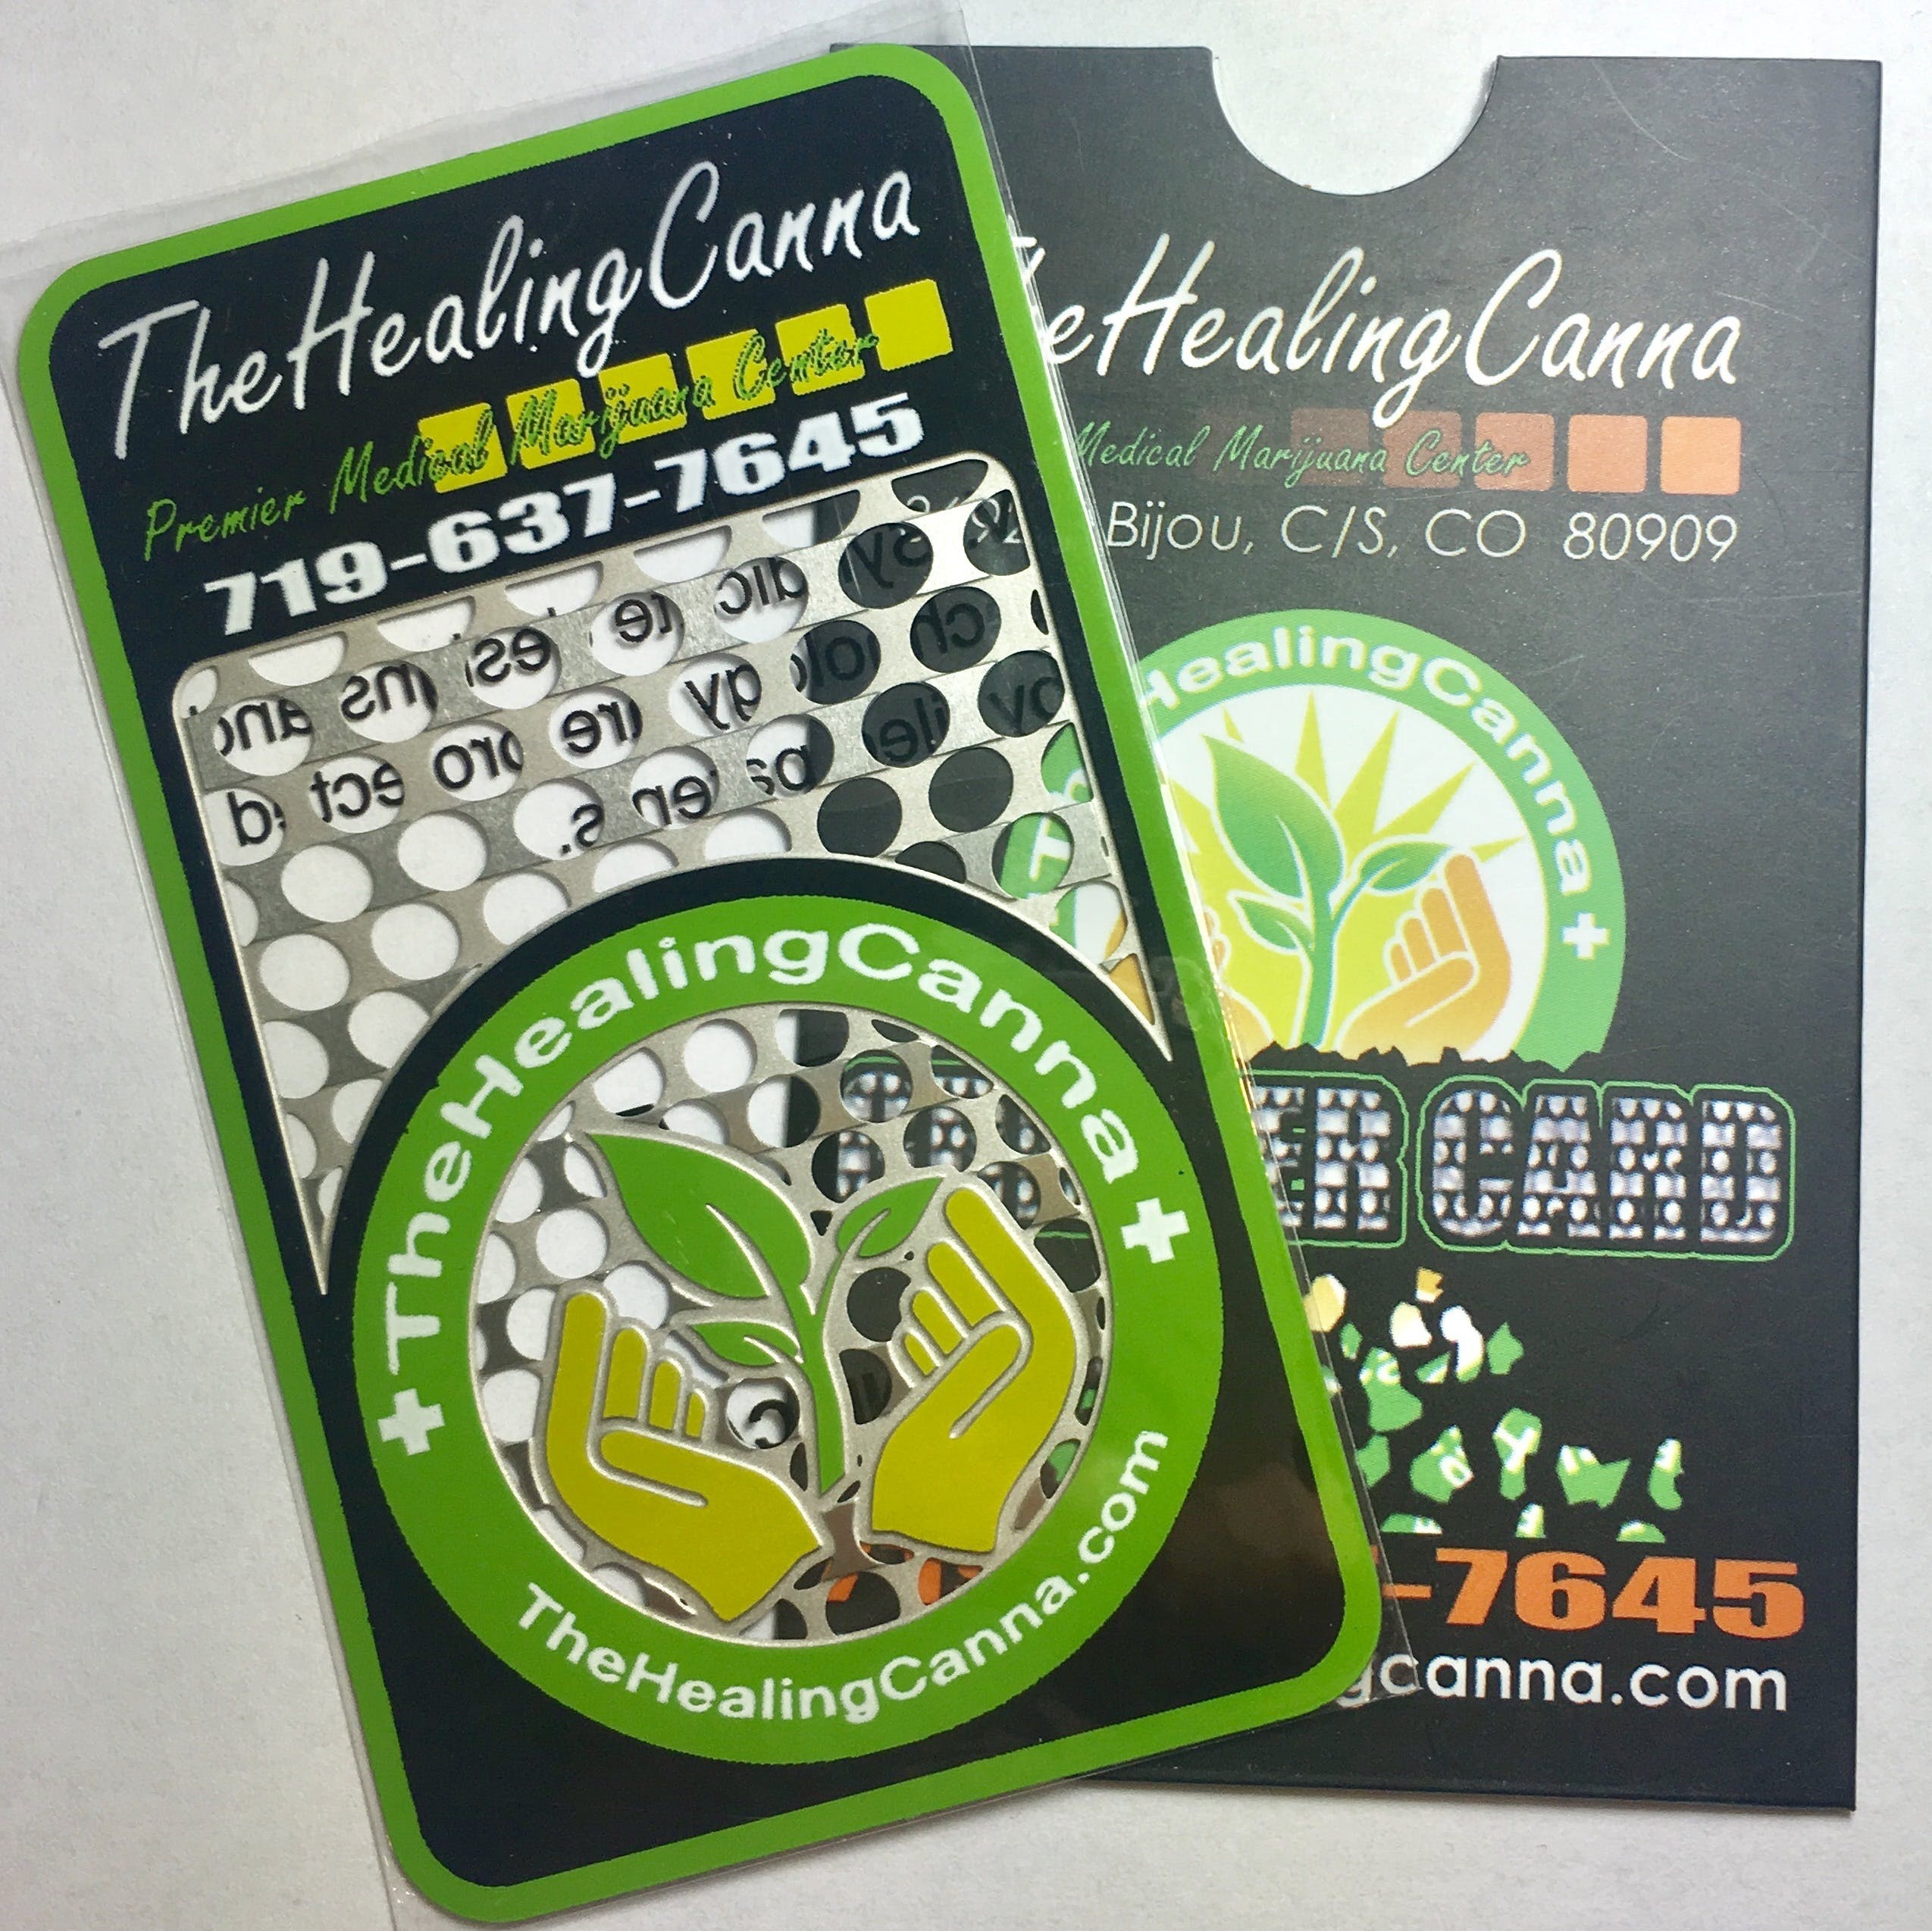 gear-the-healing-canna-logo-card-grinder